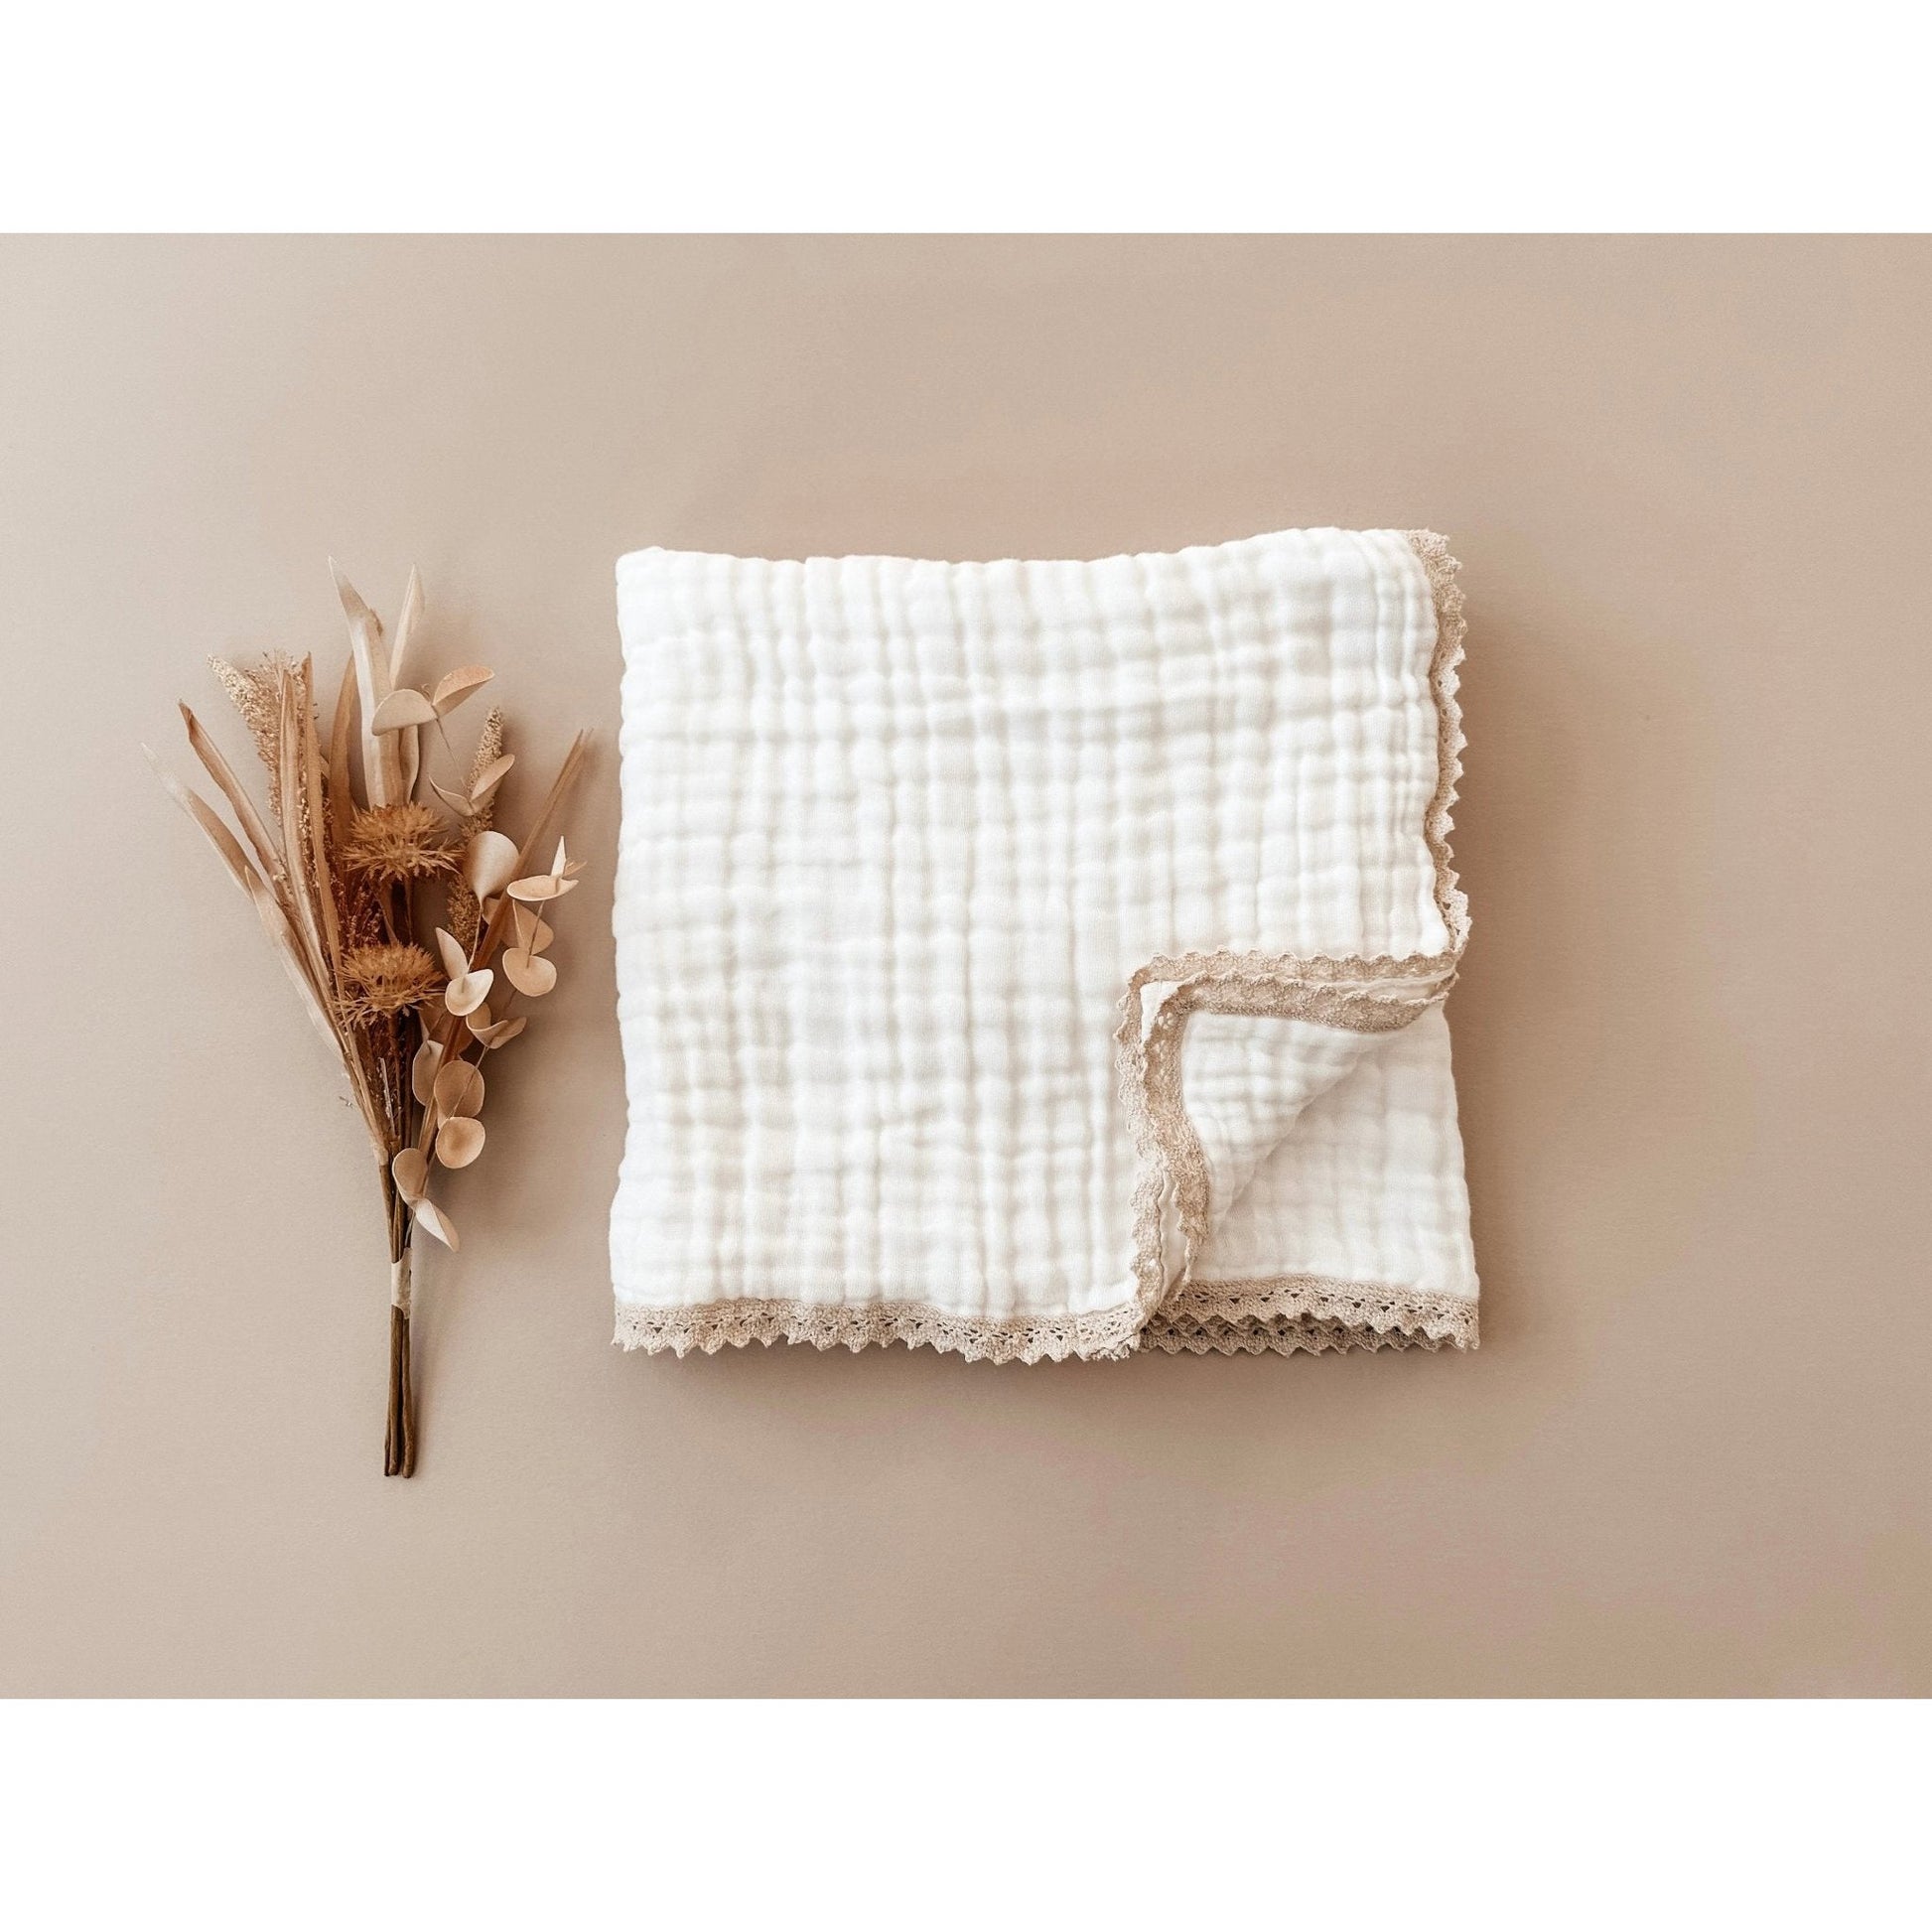 6-Layer Blanket - Cream Lace - Harp Angel Boutique